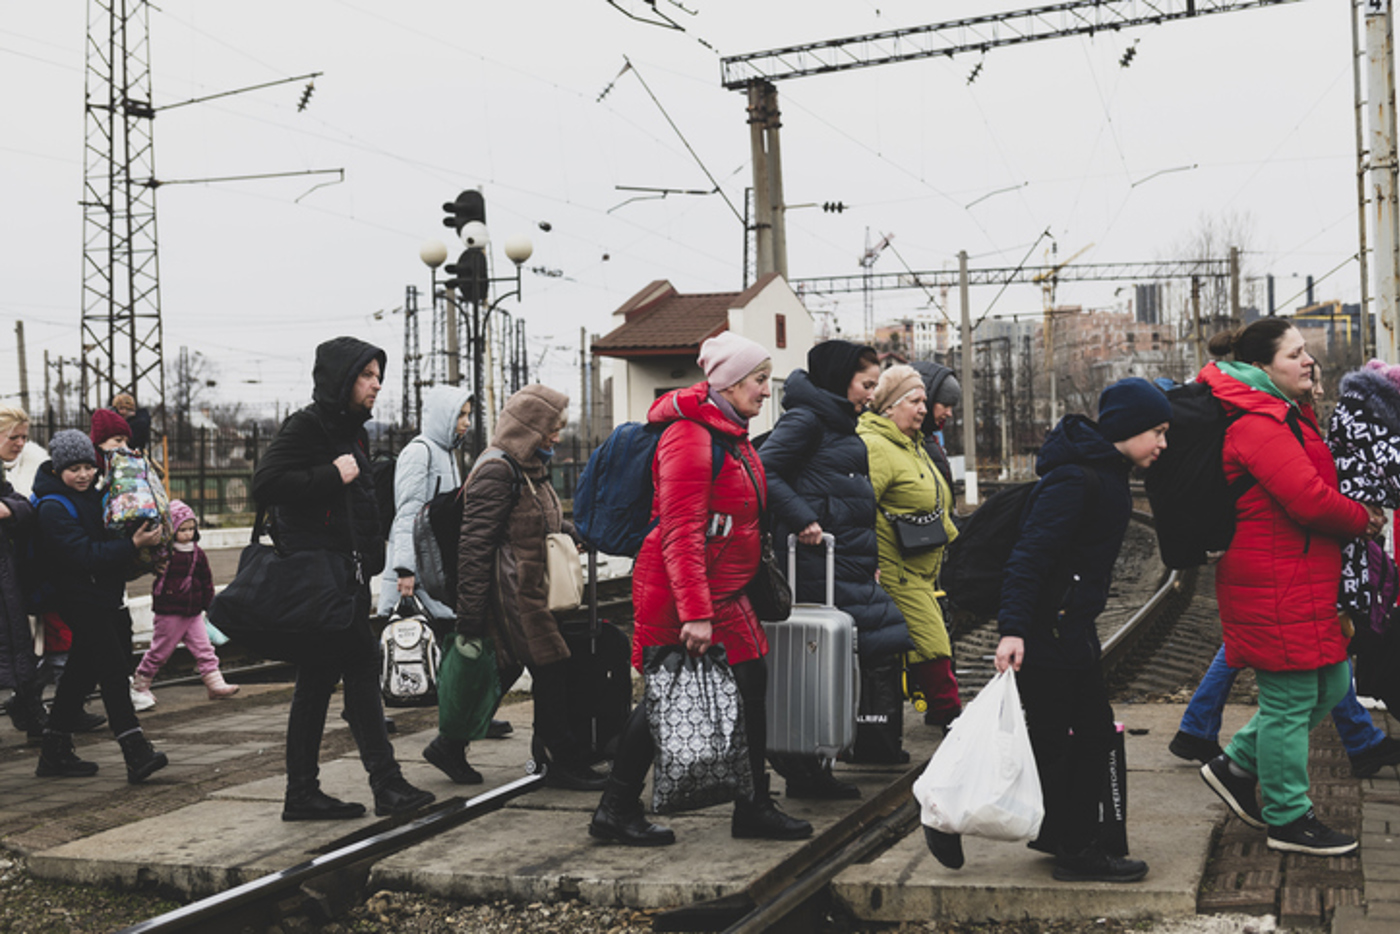 Refugees escaping conflict in Ukraine